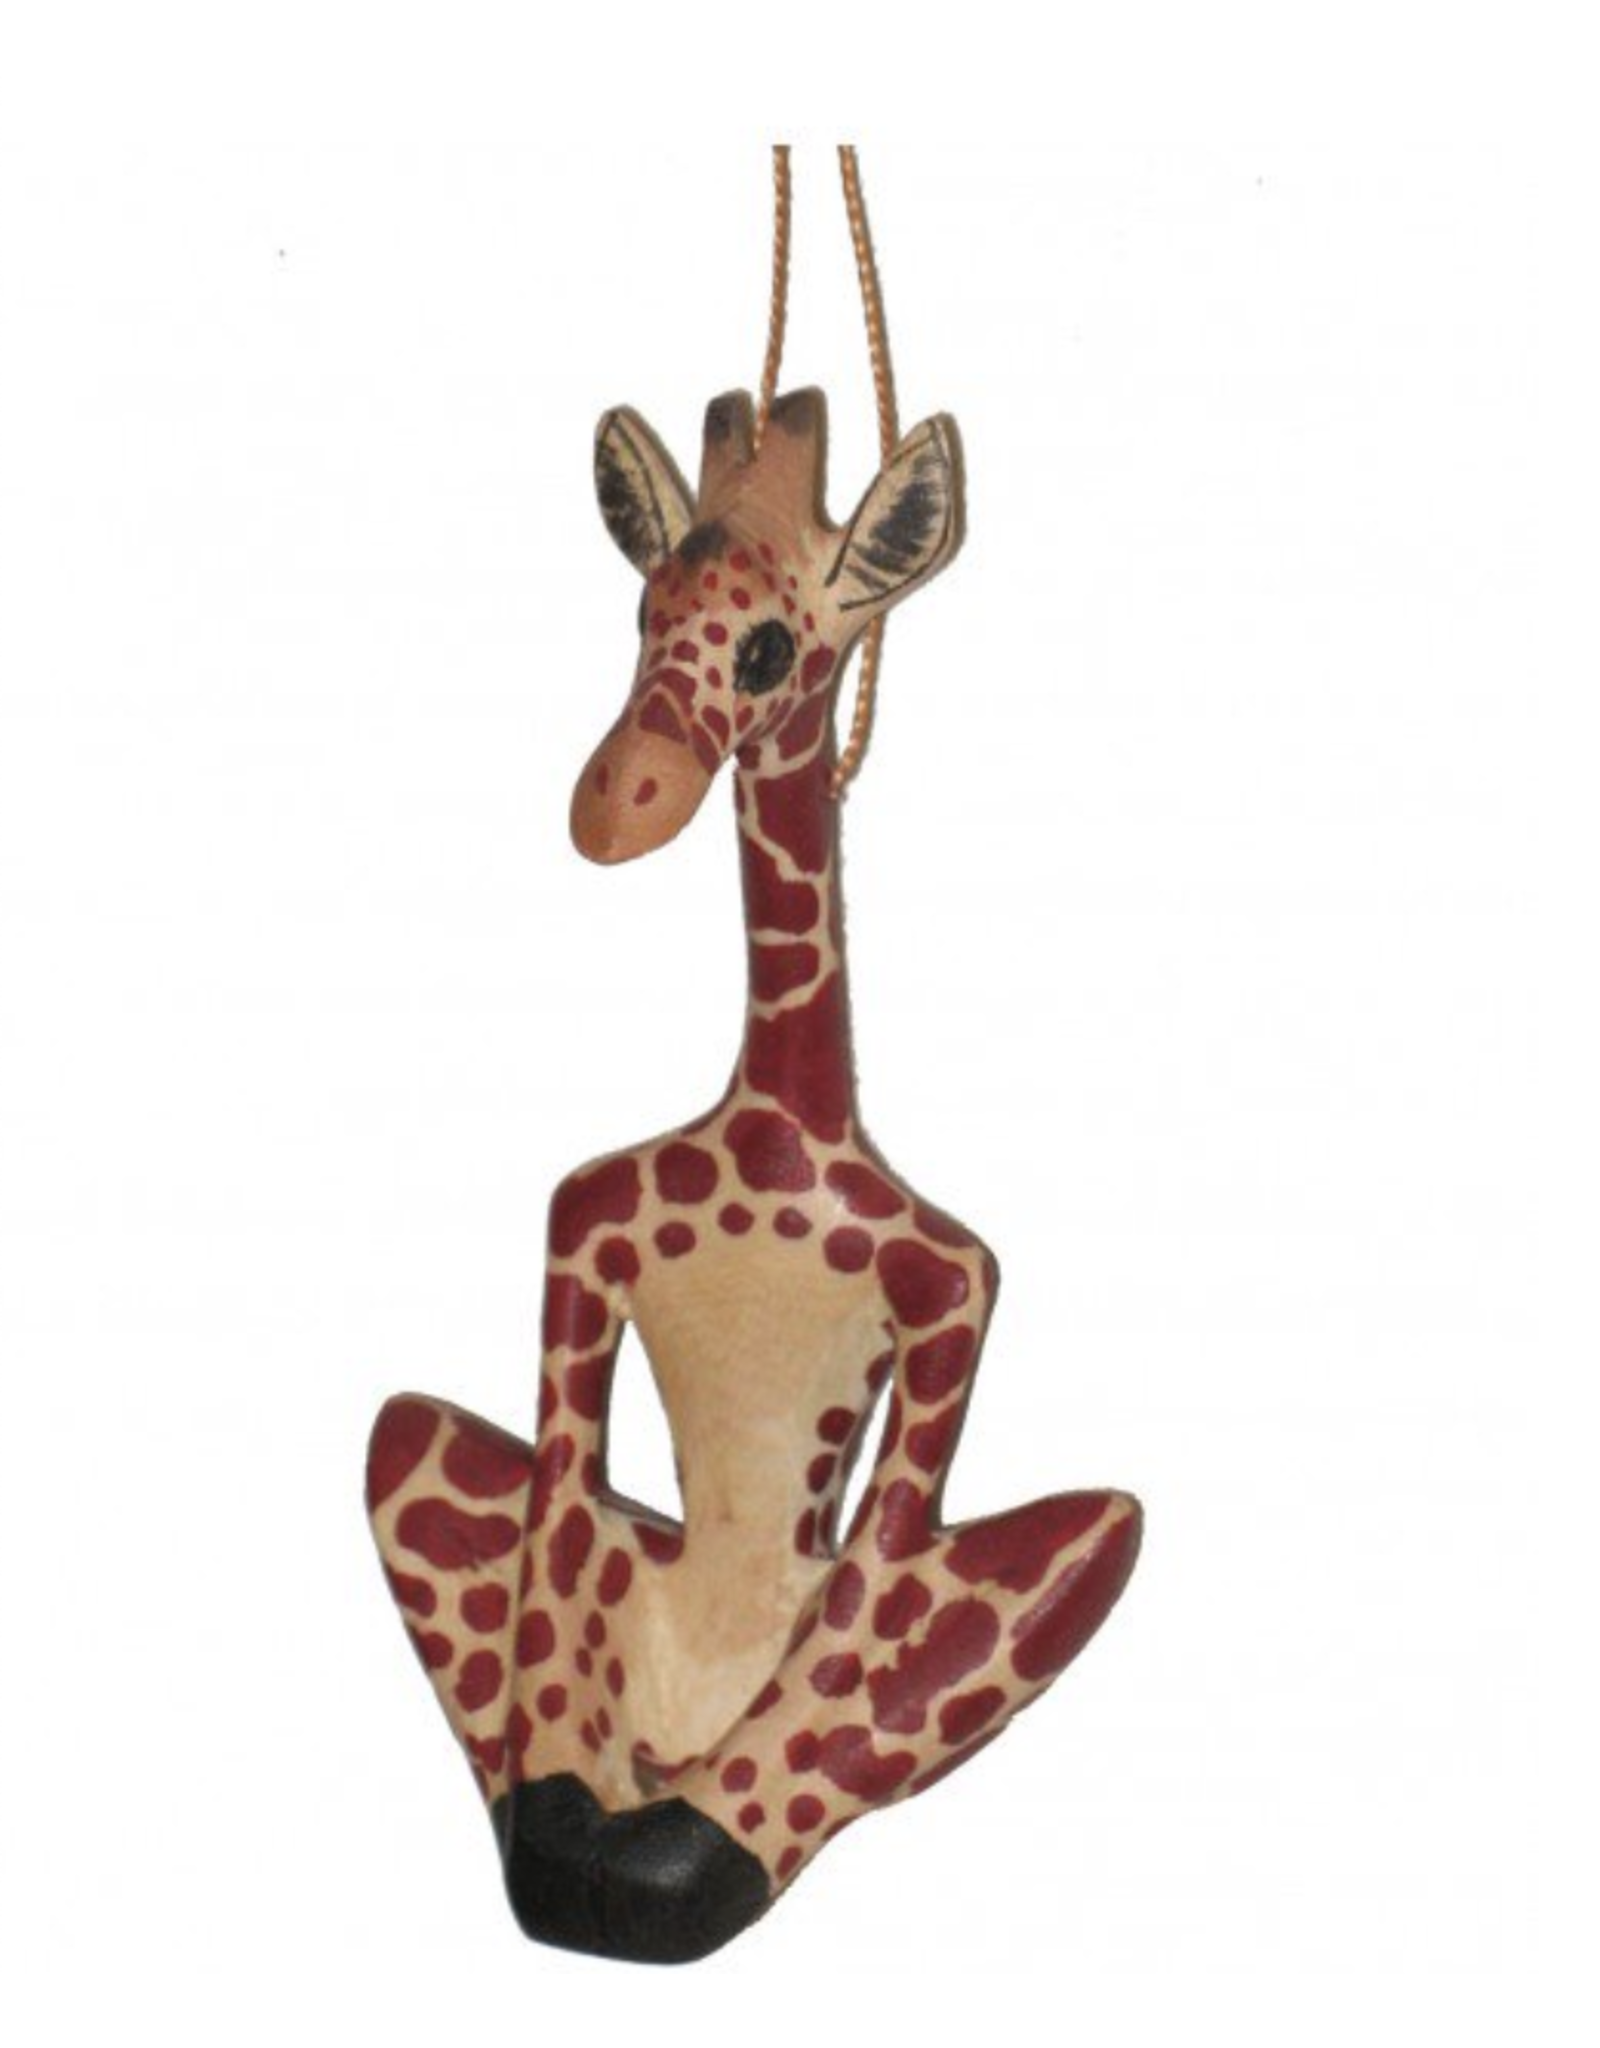 Trade roots Yoga Giraffe Ornament, Kenya